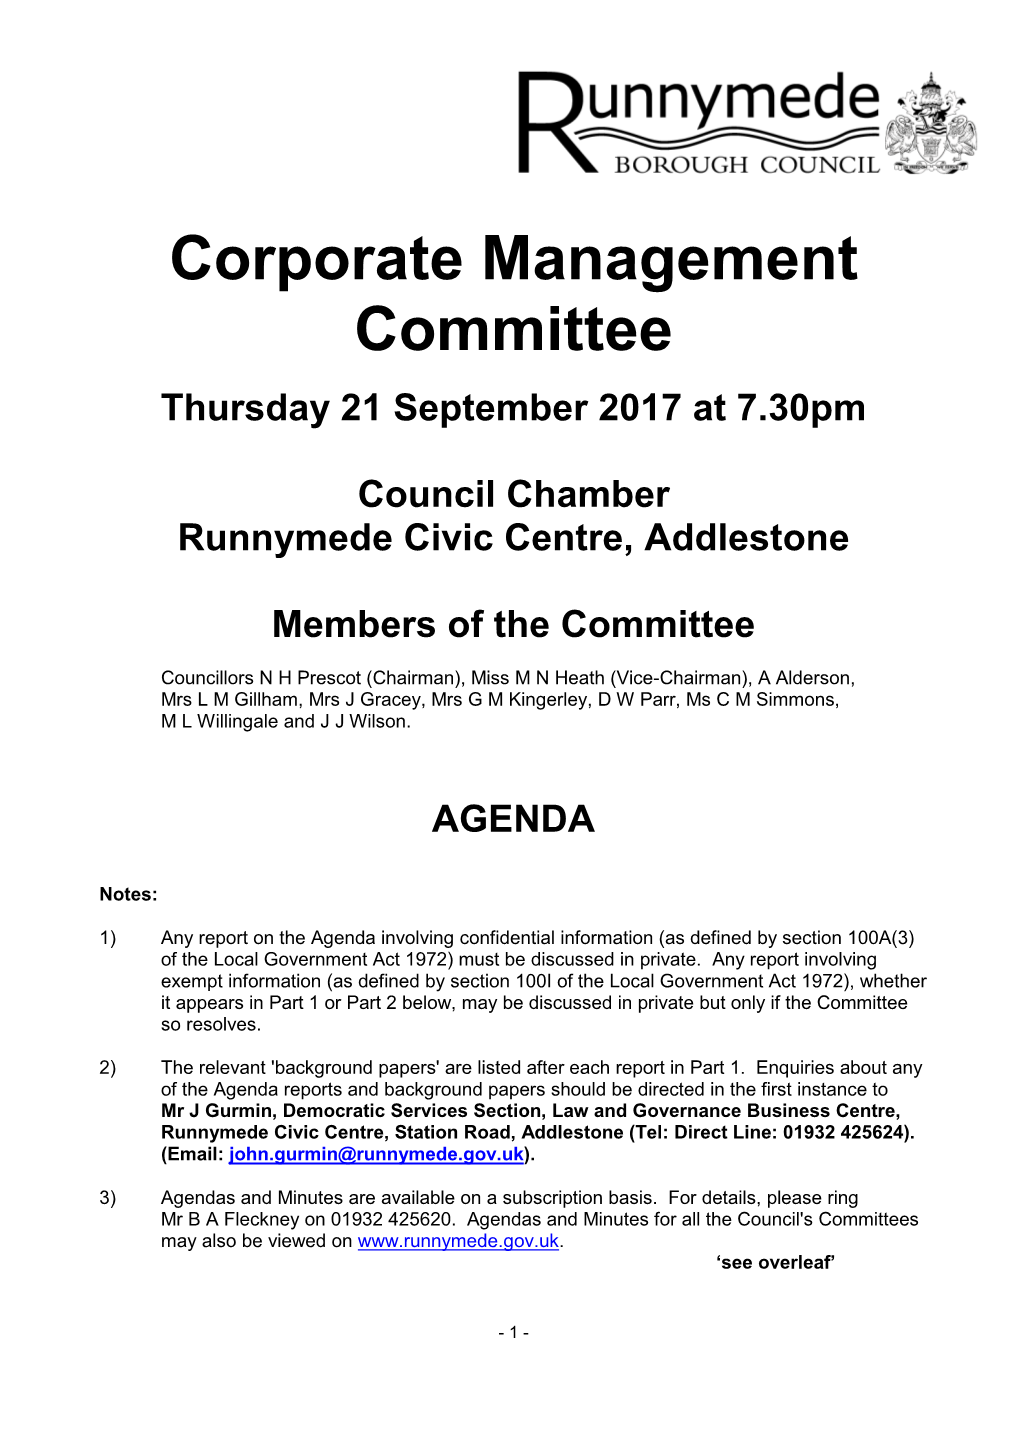 Corporate Management Committee Agenda 21 September 2017